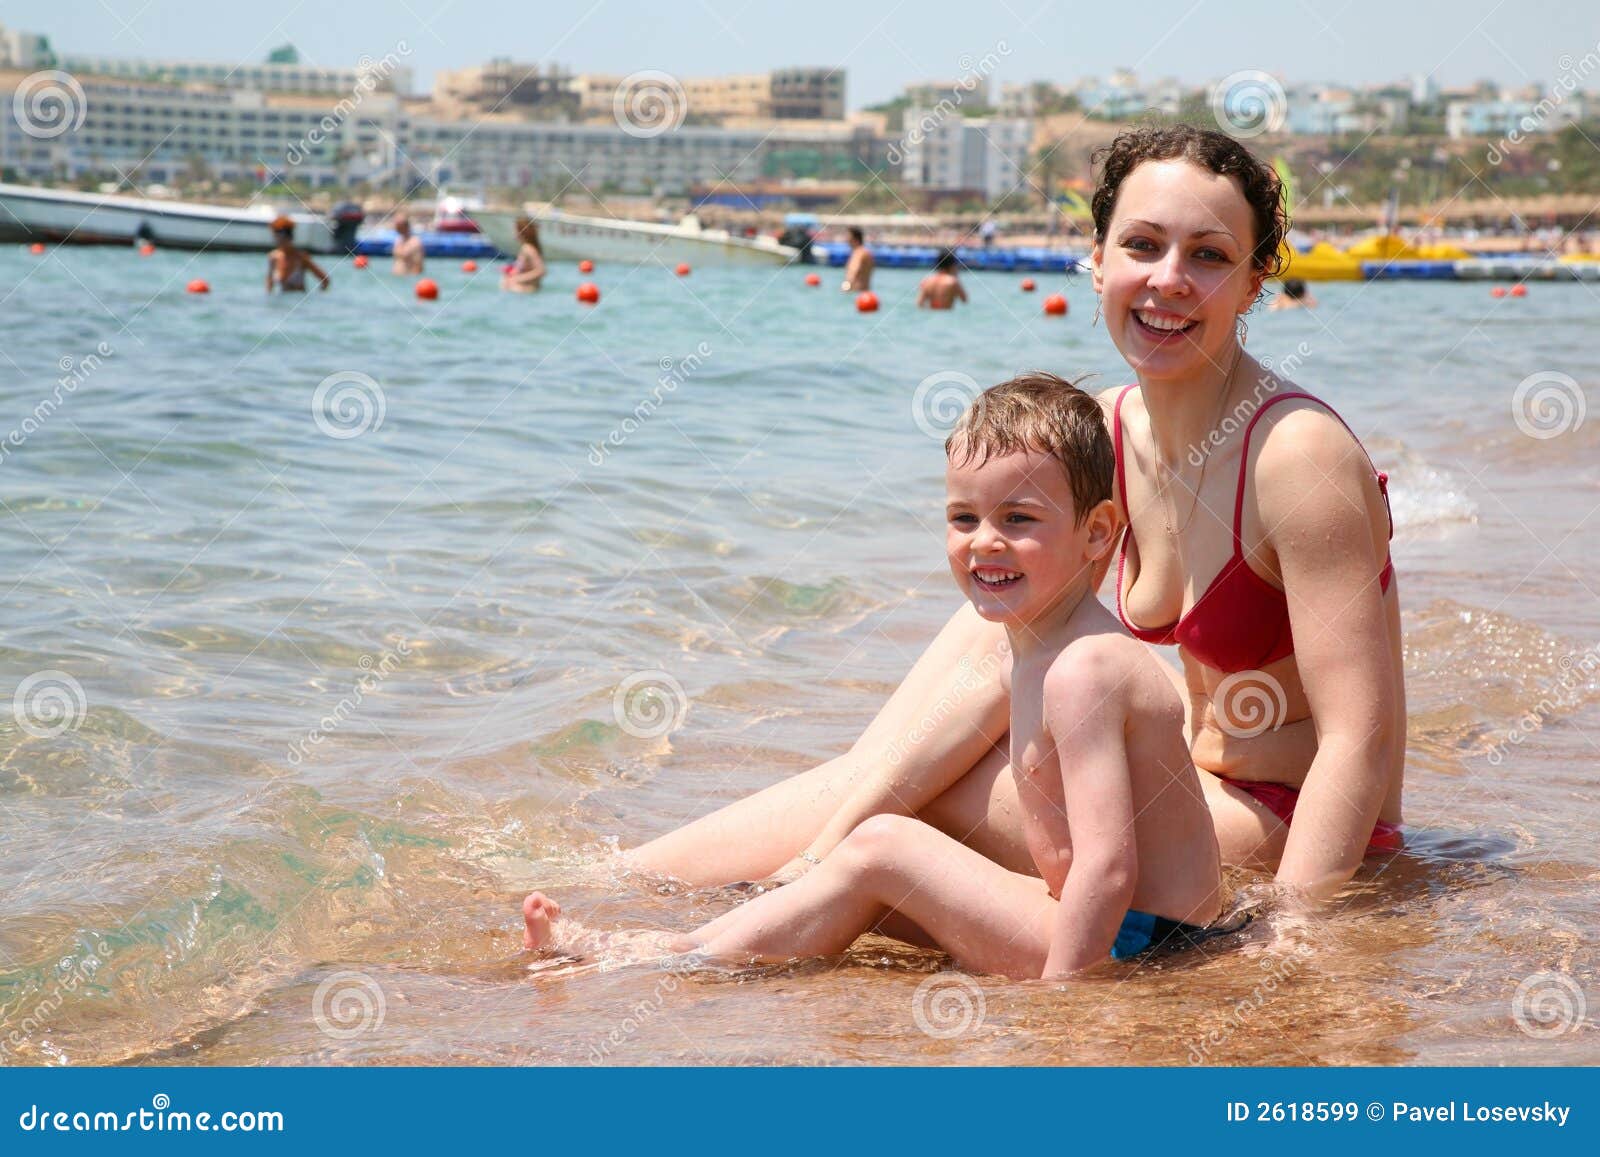 сын на пляже голым фото 58